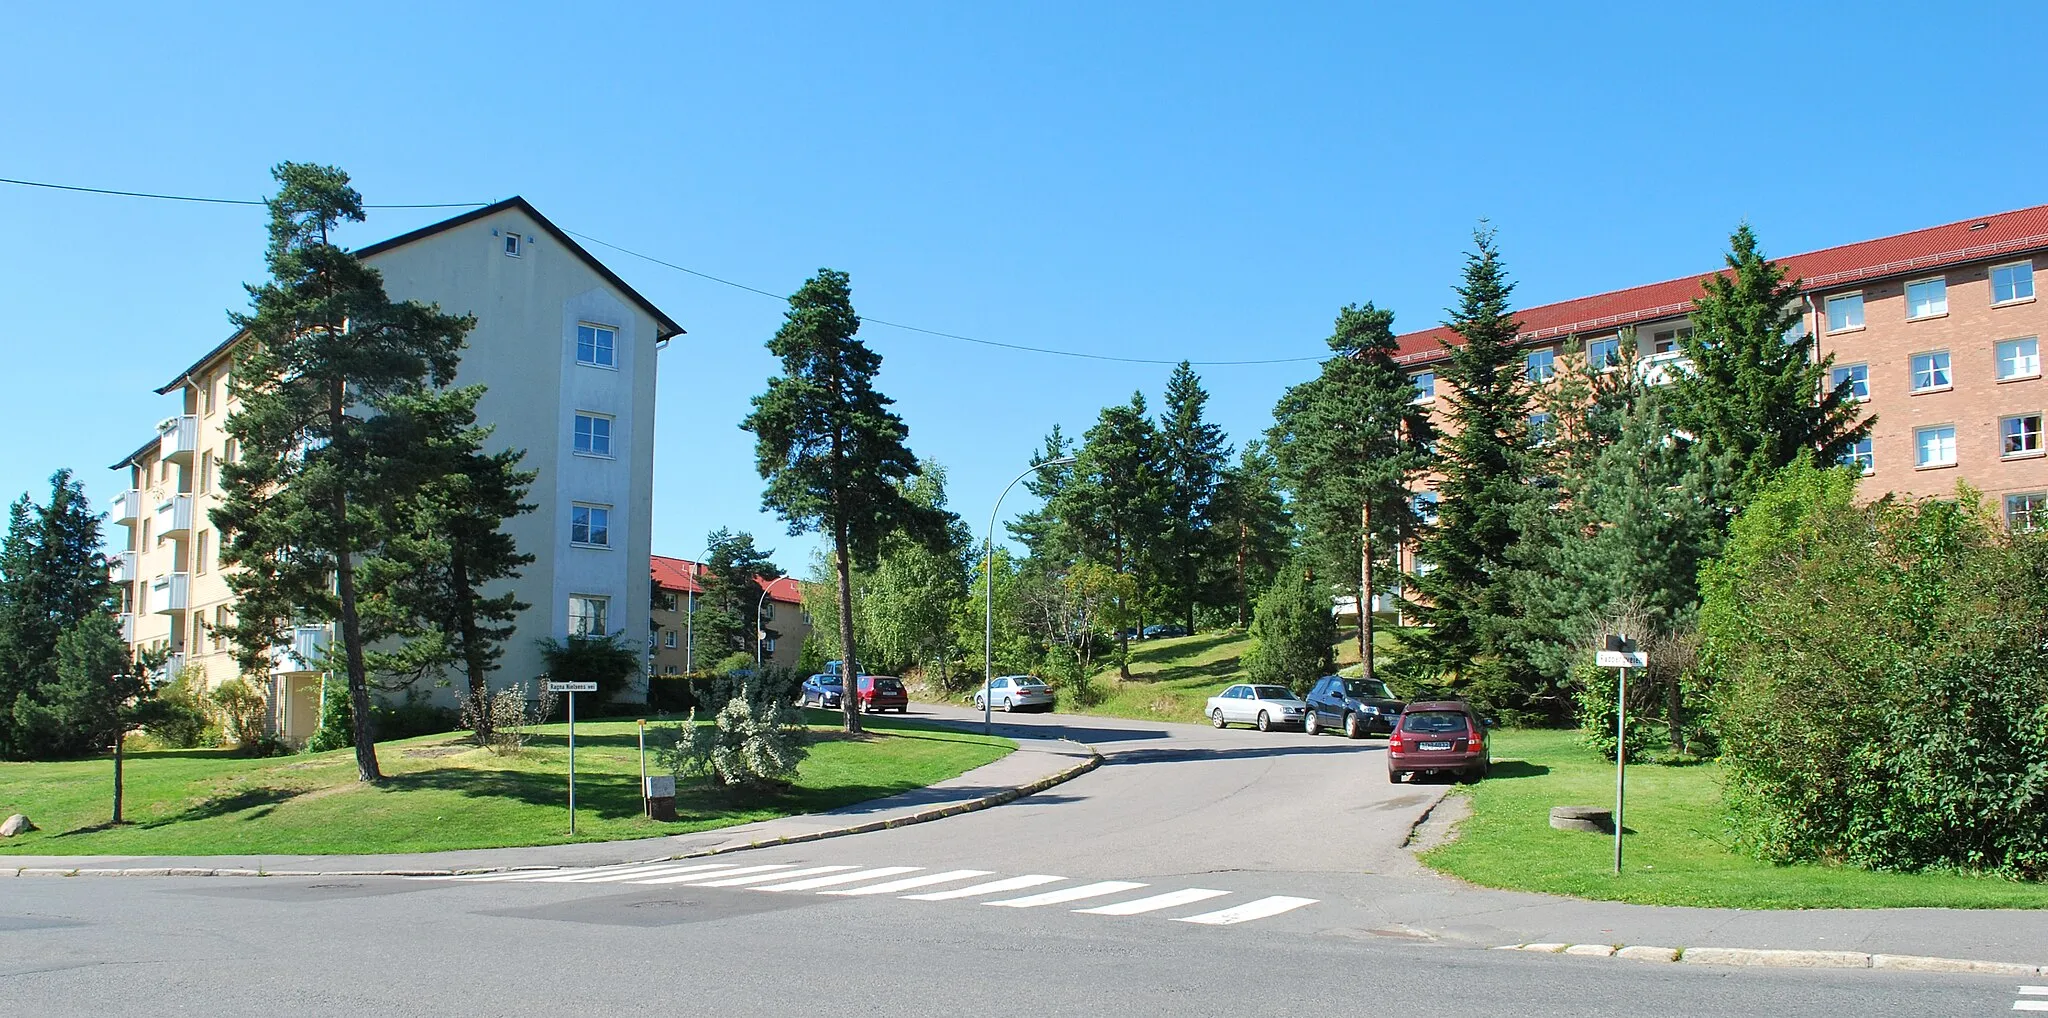 Photo showing: Apartment blocks at Ragna Nielsens vei, Tonsenhagen, Oslo, Norway